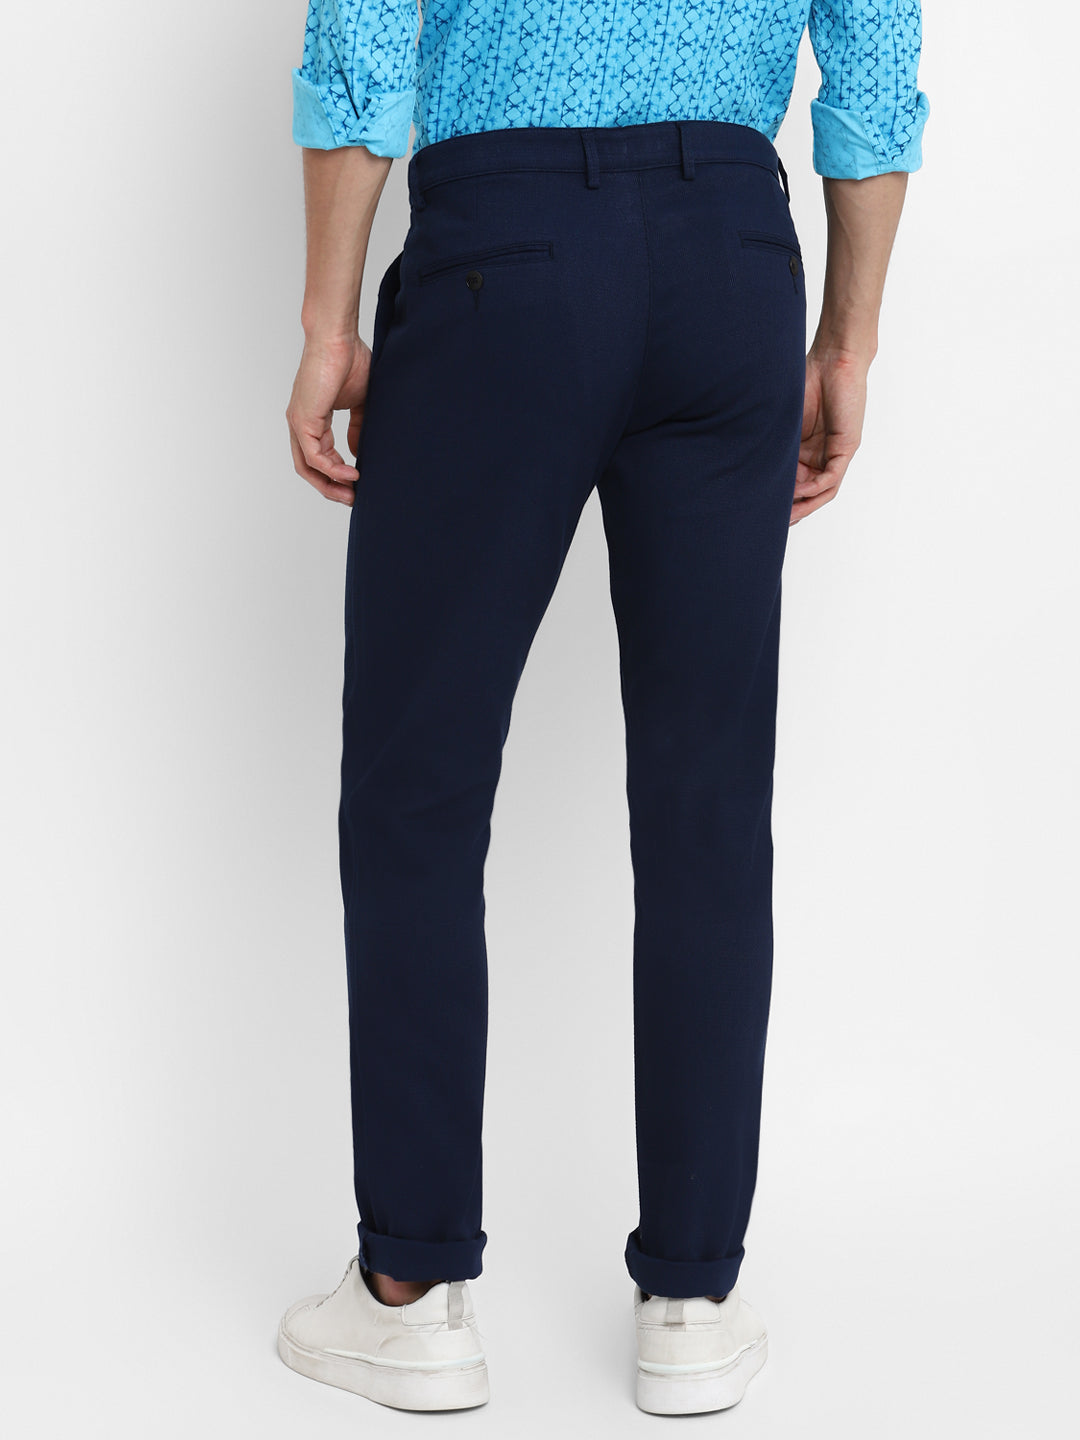 Navy Blue Ultra Slim Fit Self Design Trouser